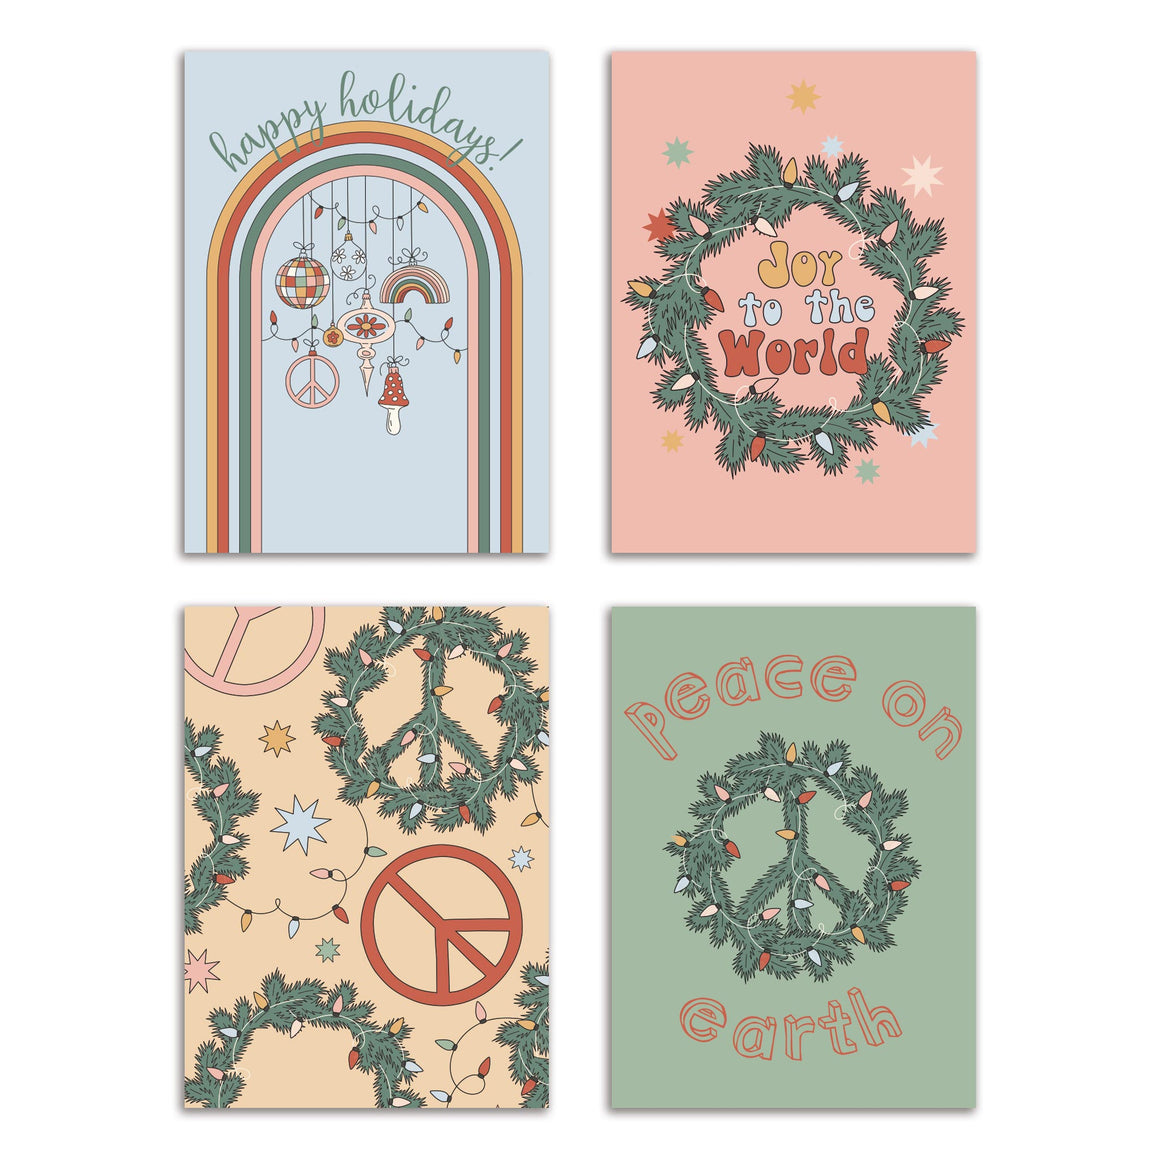 24 Boho Holiday Cards in 4 Vintage Colorful Designs w/ Envelopes